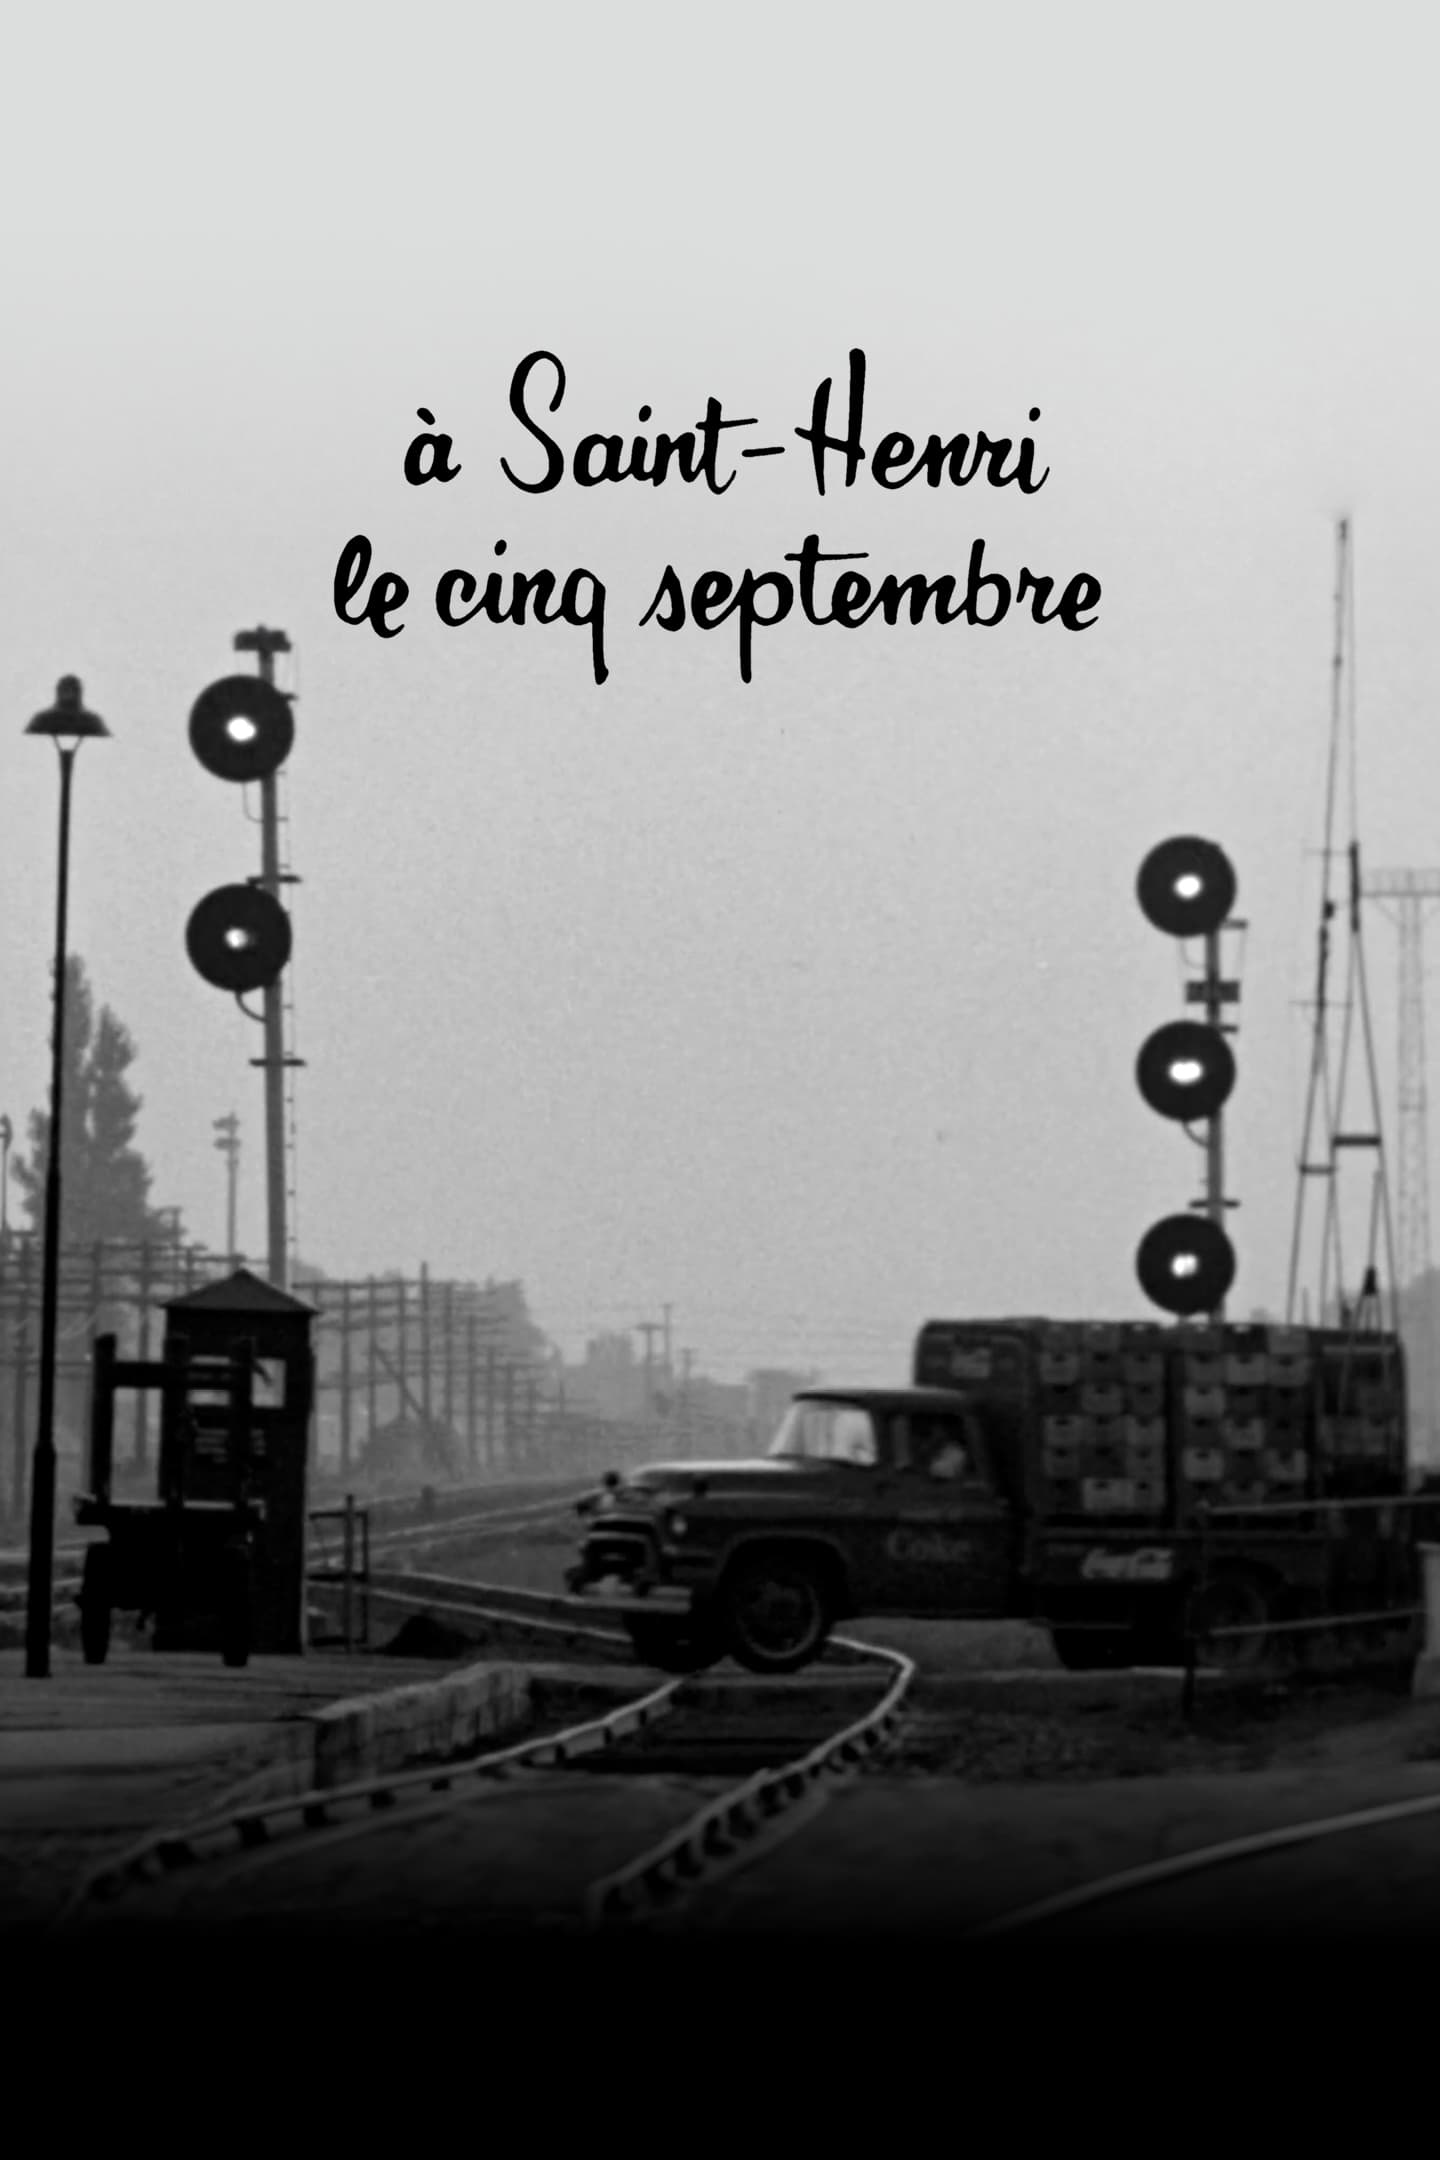 September Five at Saint-Henri